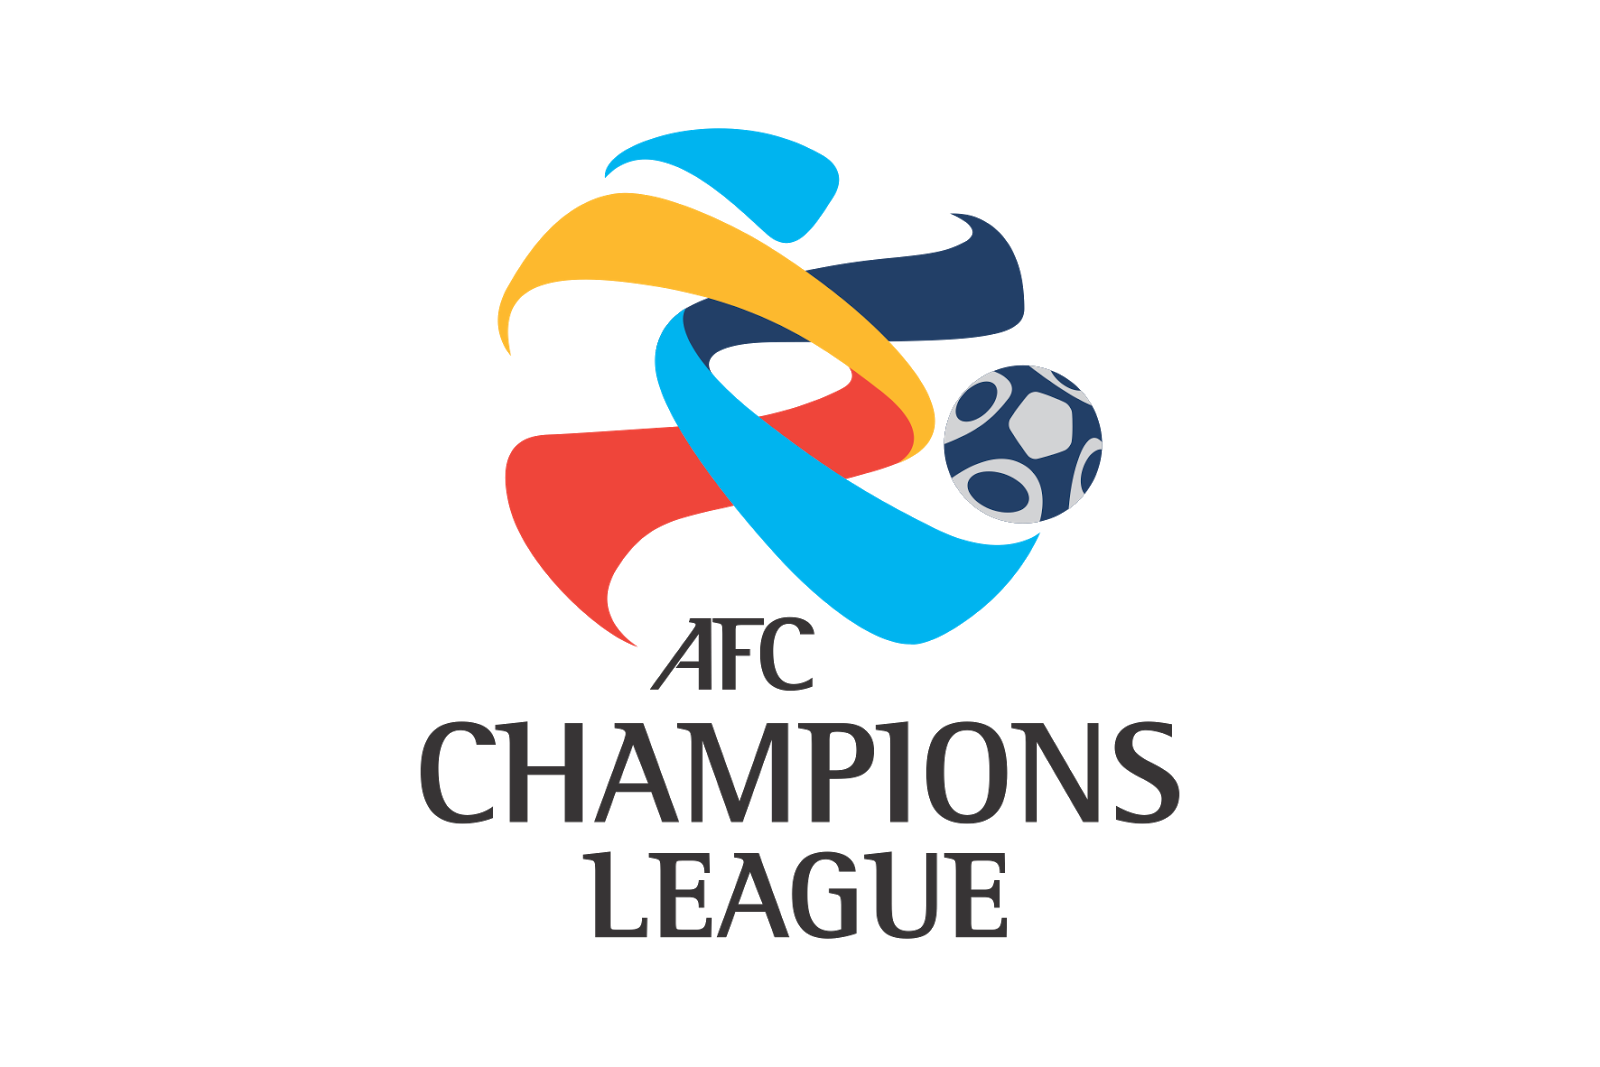 Afc Champions League Png Hdpng.com 1600 - Afc Champions League, Transparent background PNG HD thumbnail